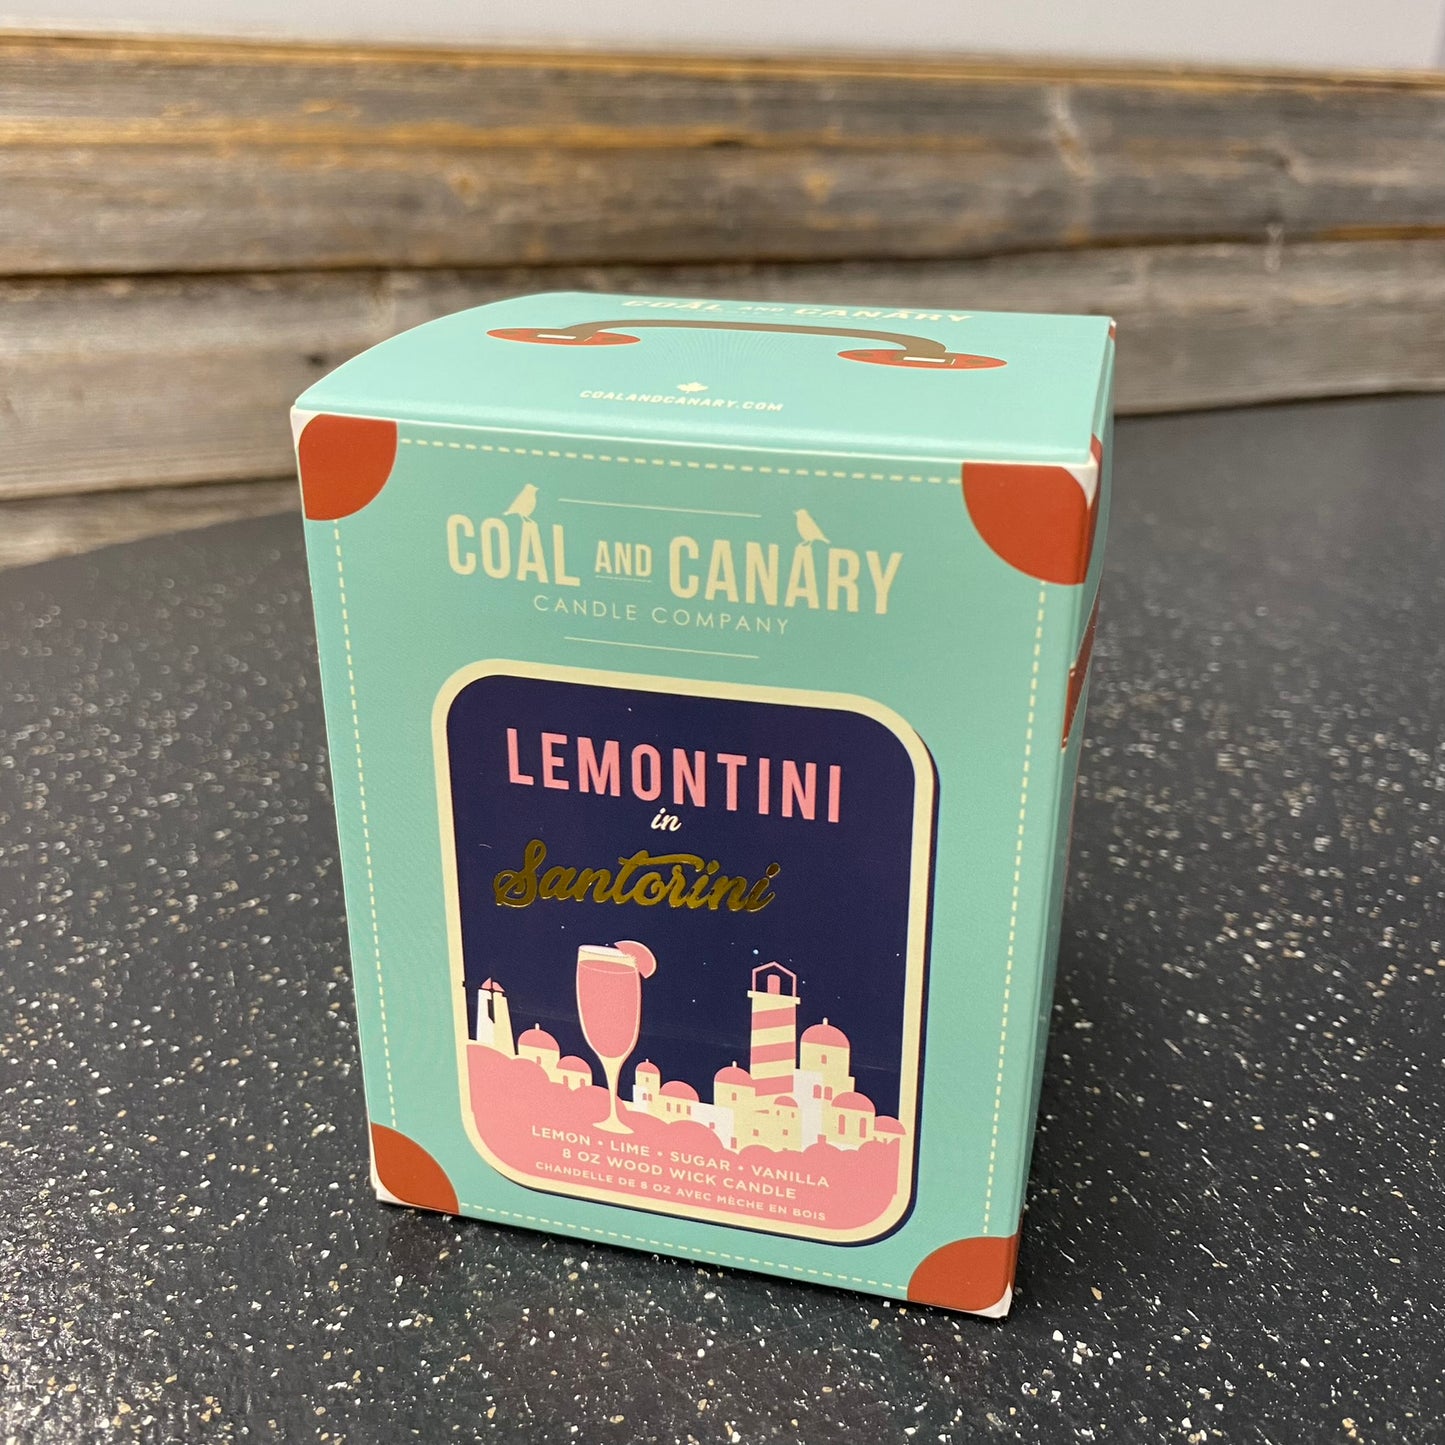 Lemontini in Santorini by Coal & Canary